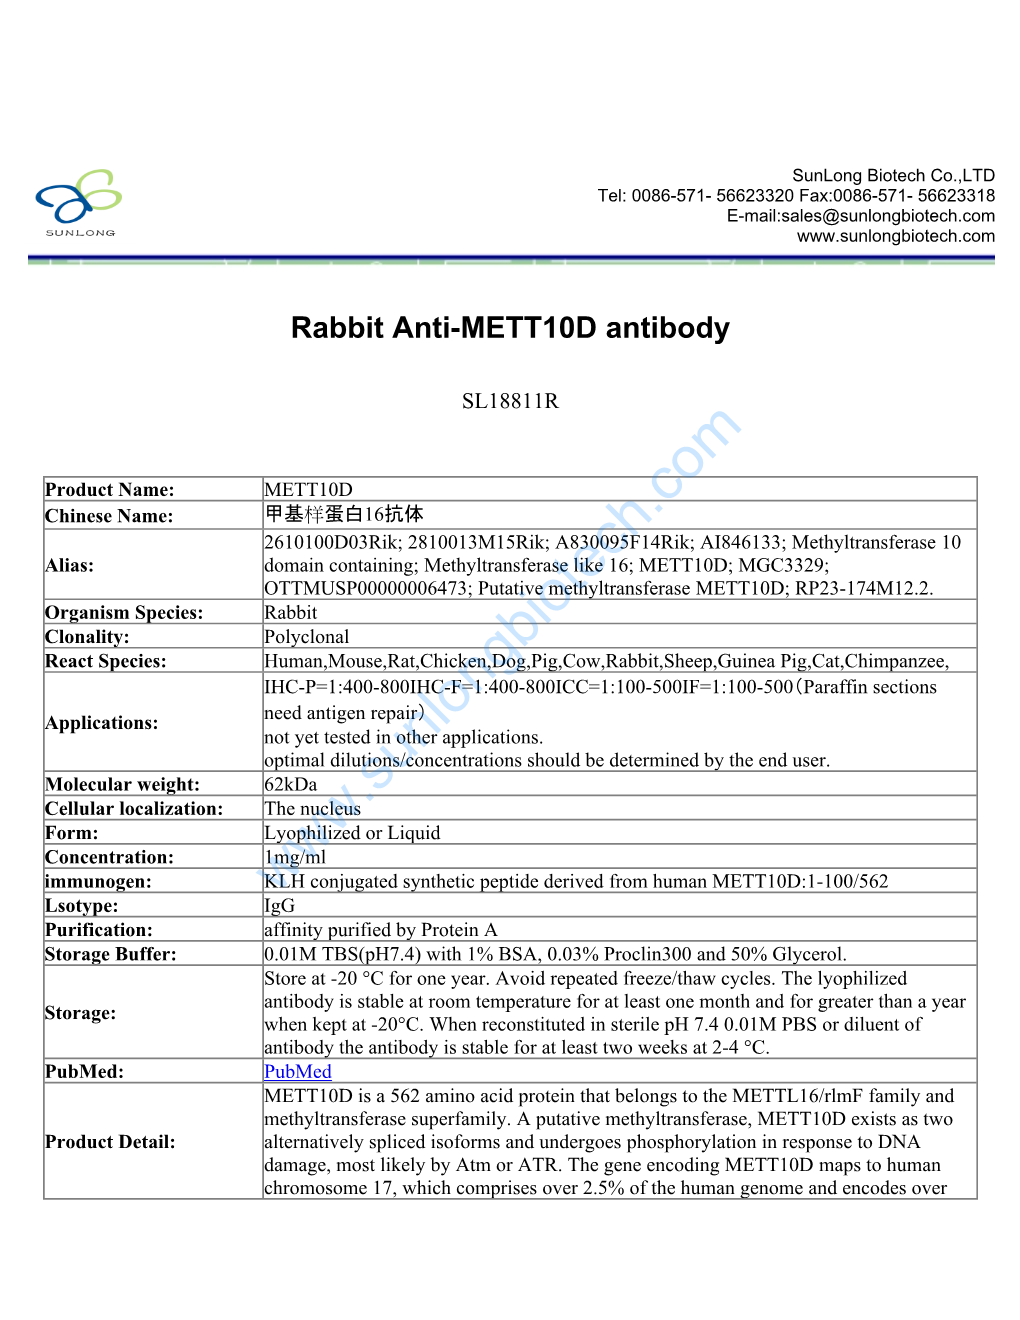 Rabbit Anti-METT10D Antibody-SL18811R